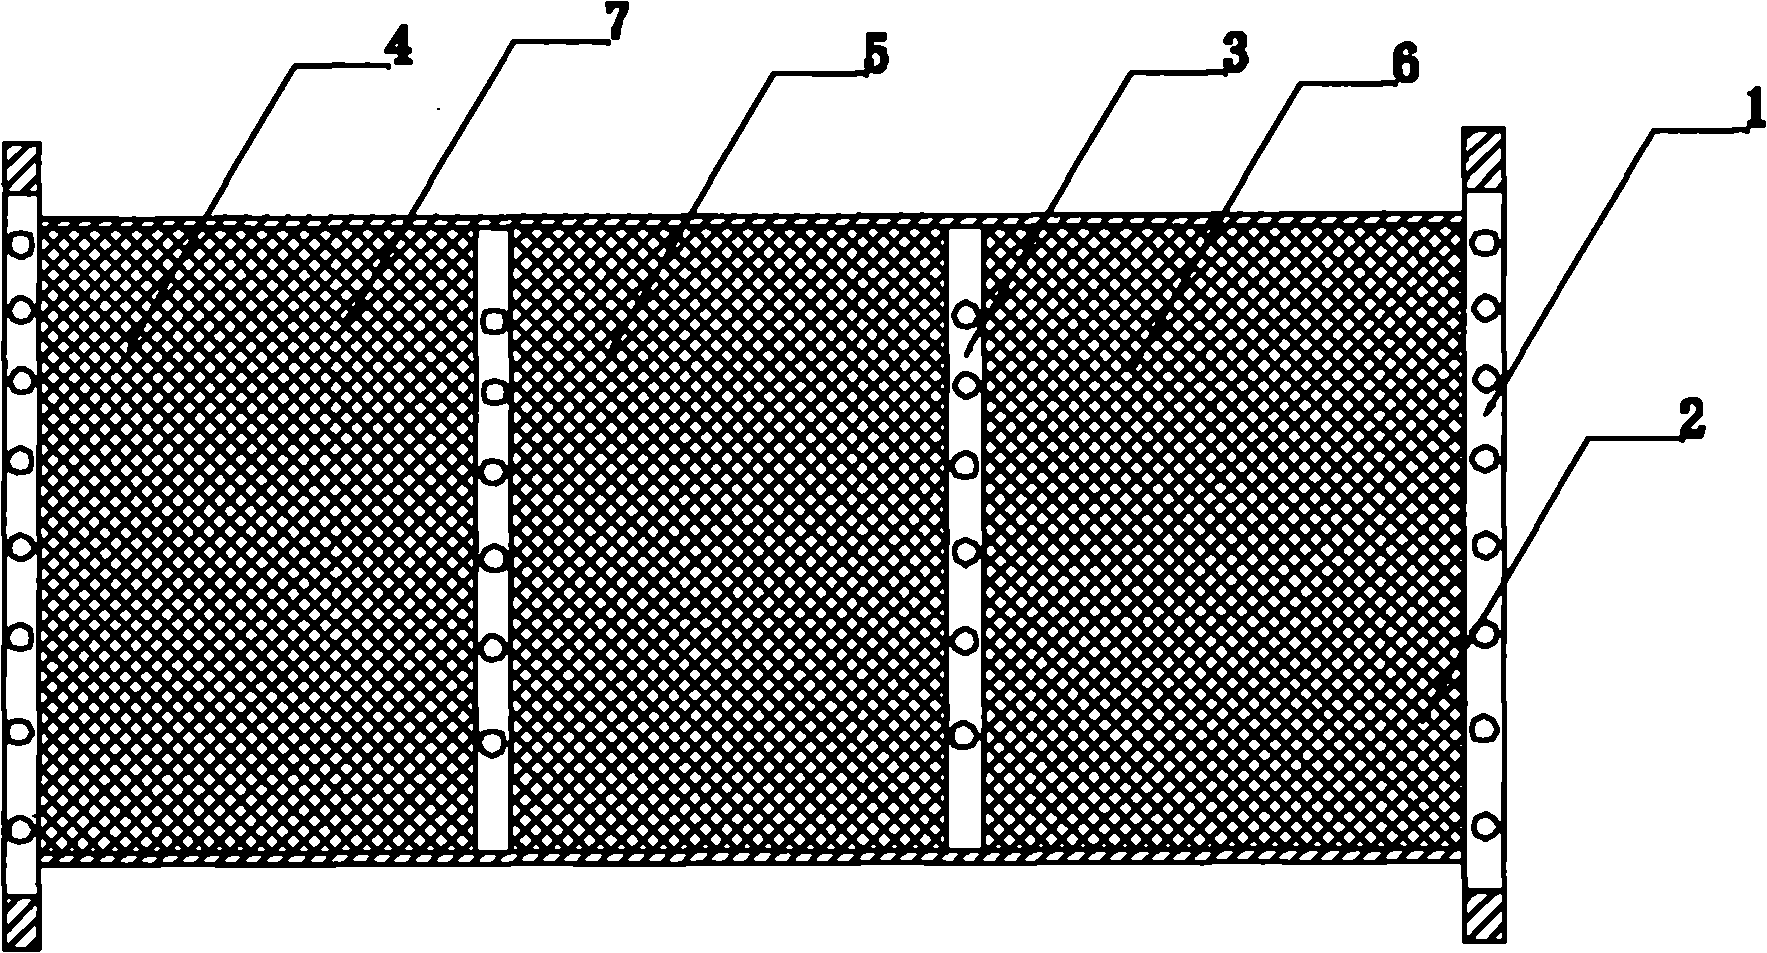 Anti-blocking cylindrical classifying screen